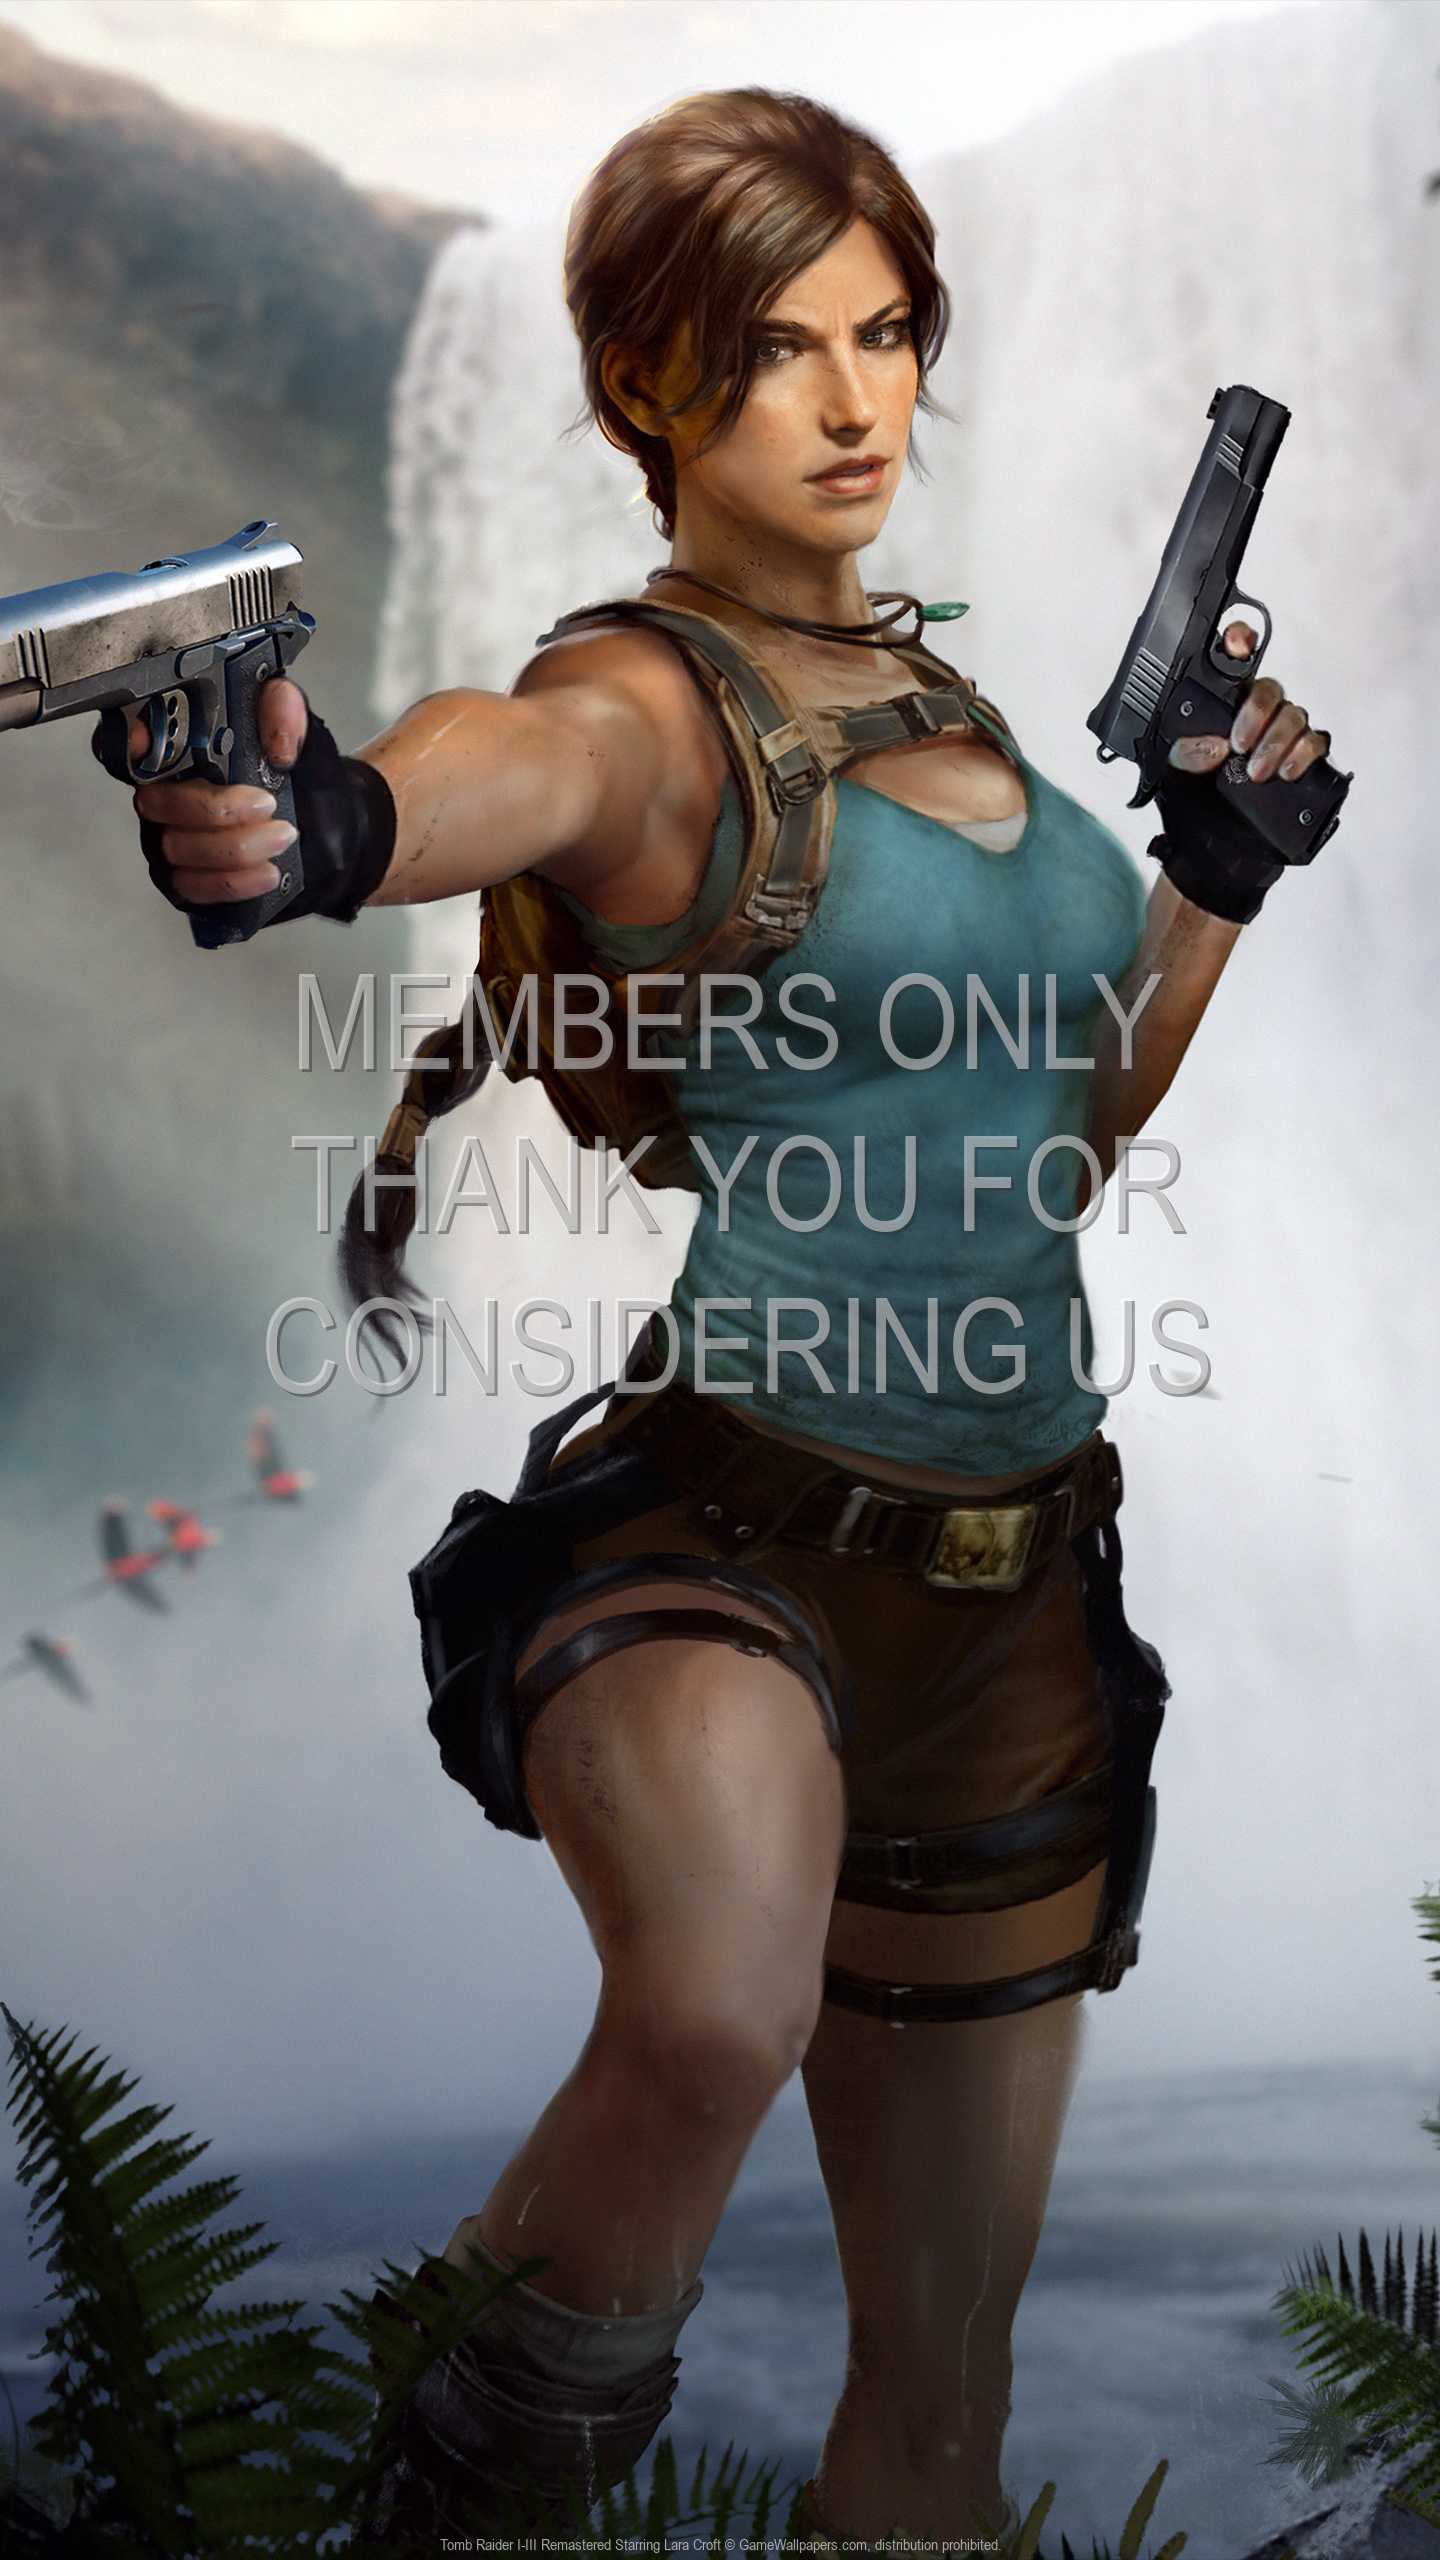 Tomb Raider I-III Remastered Starring Lara Croft 1440p Vertical Mvil fondo de escritorio 02